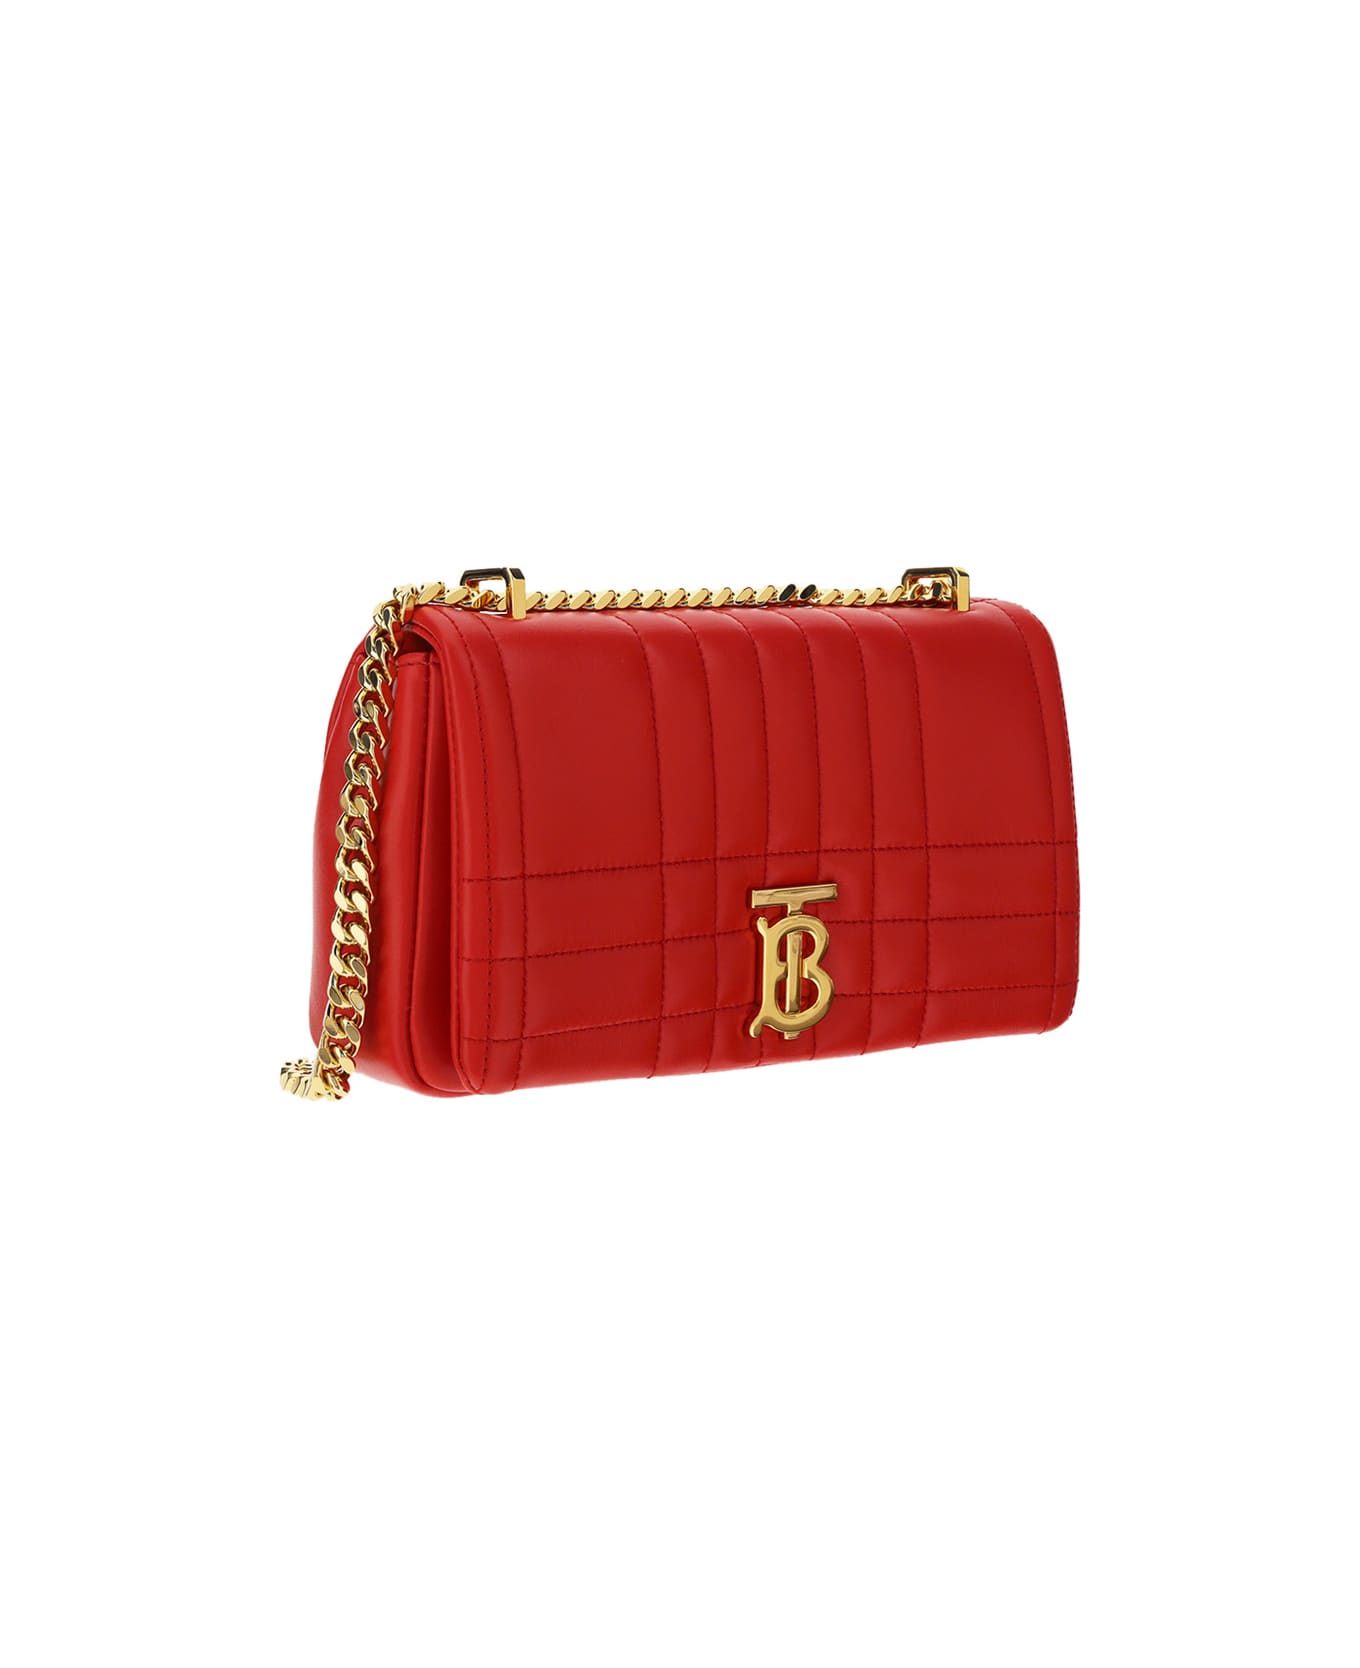 Burberry Lola Shoulder Bag - Bright Red Rt